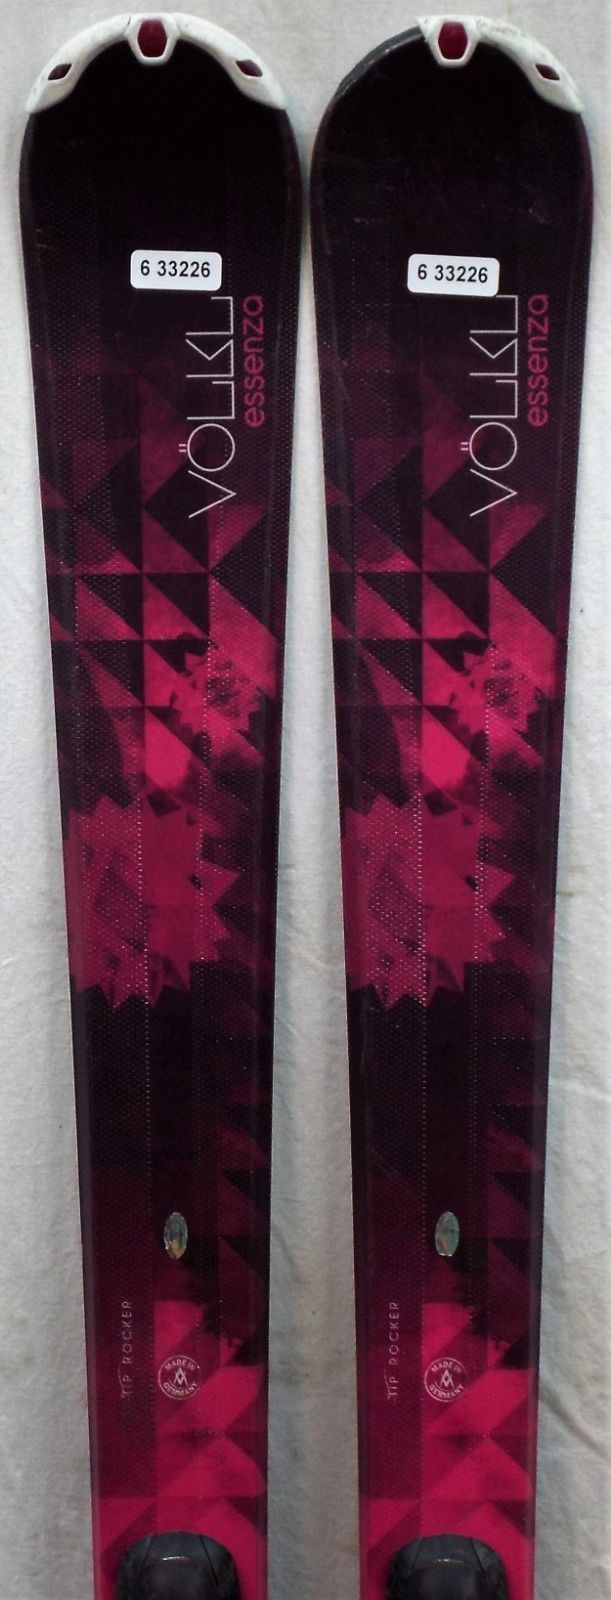 13-14 Volkl Adora Used Women's Demo Skis w/ Bindings Size 153cm #633226